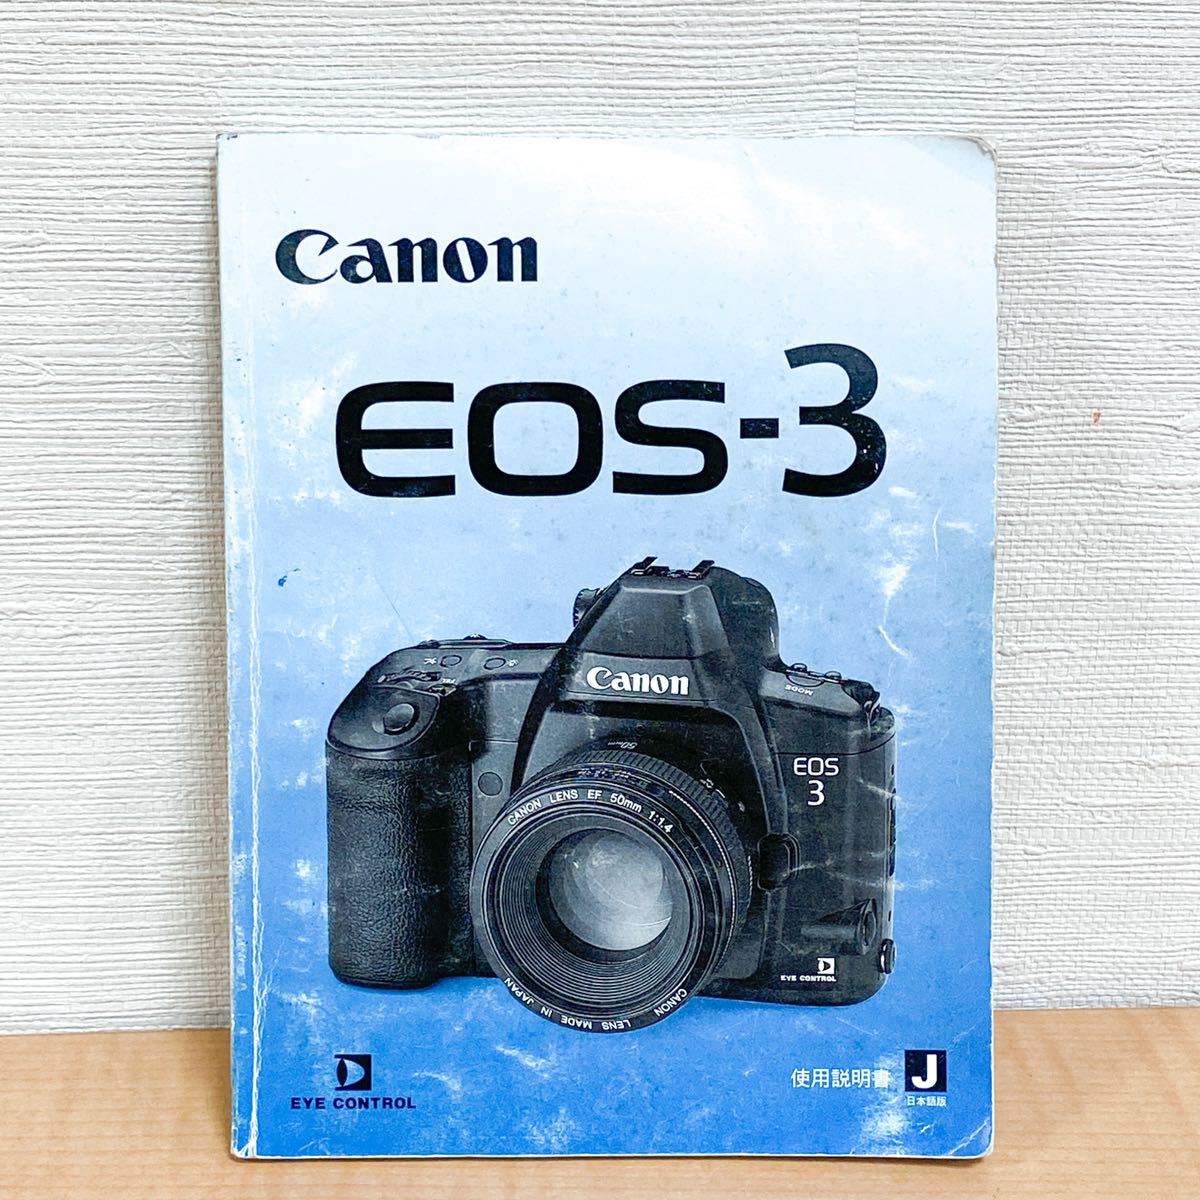 *Canon Canon EOS-3 single‐lens reflex camera owner manual only 